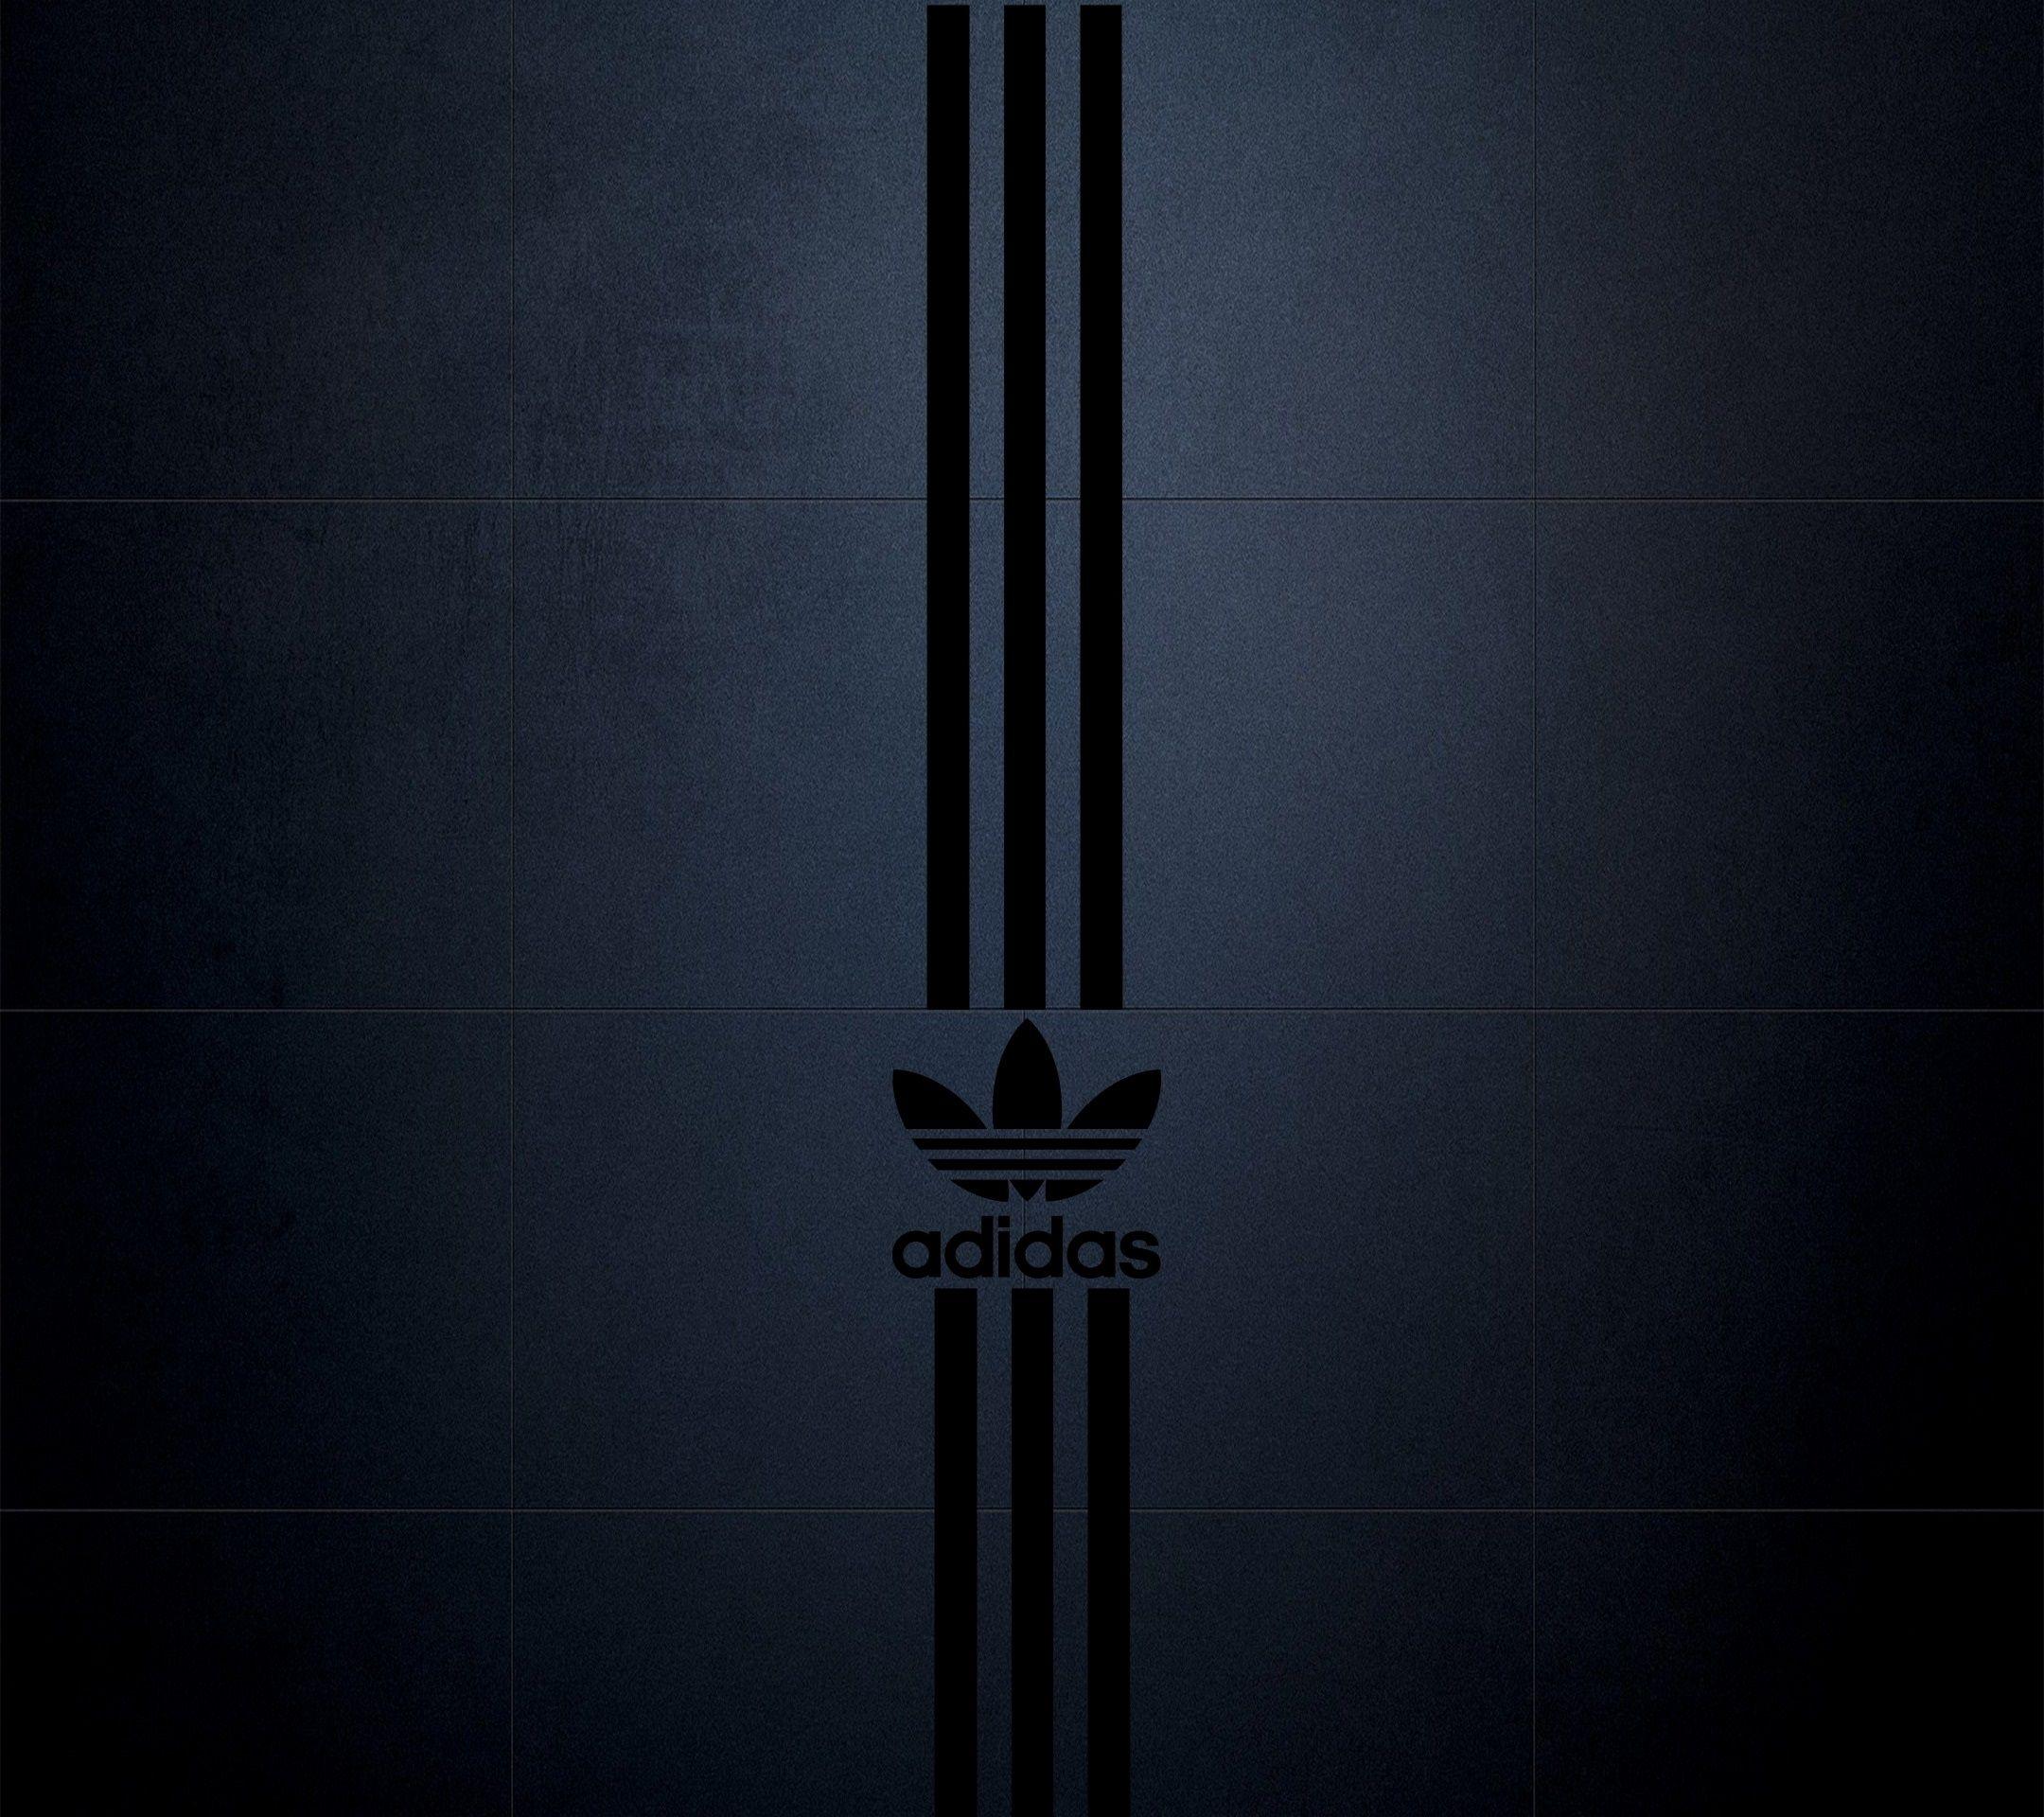 Adidas dark logo HD Adidas dark logo wallpaper